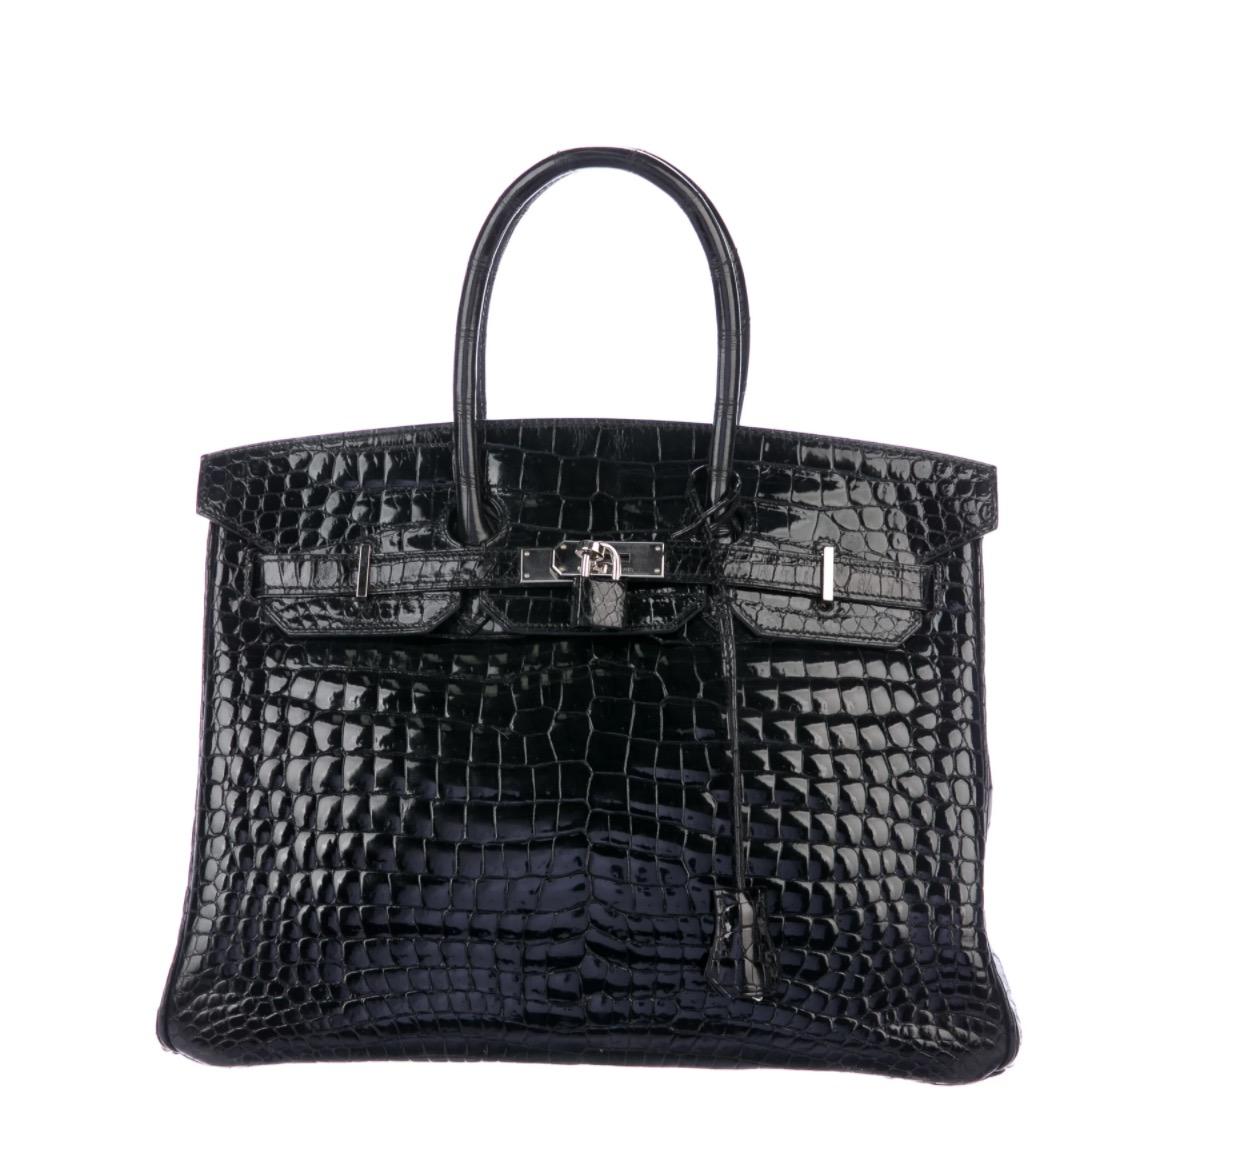 Hermes Birkin 35 Black Shiny Crocodile Top Handle Satchel Tote Bag in Box